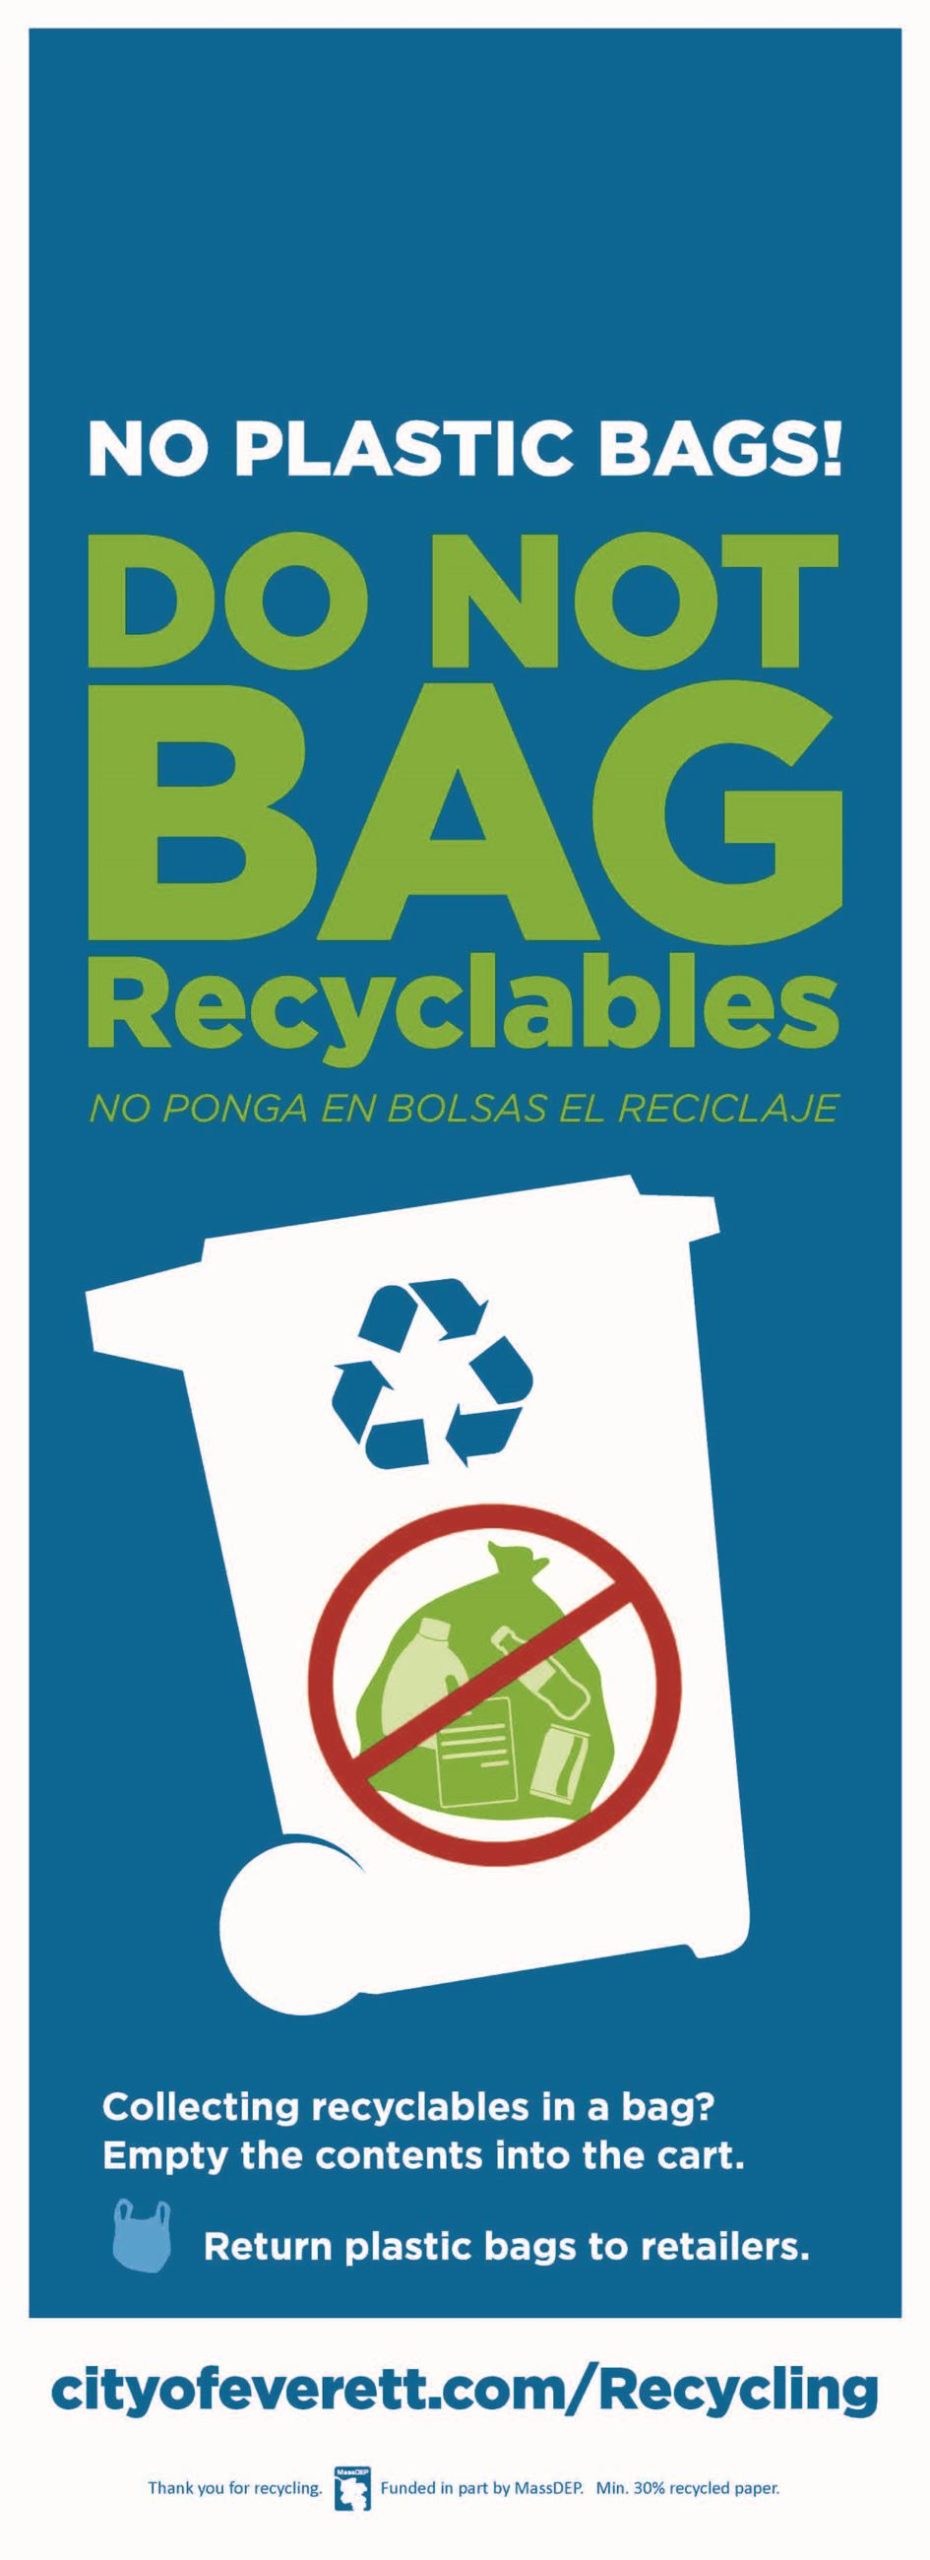 Recycling - Everett, MA - Official Website